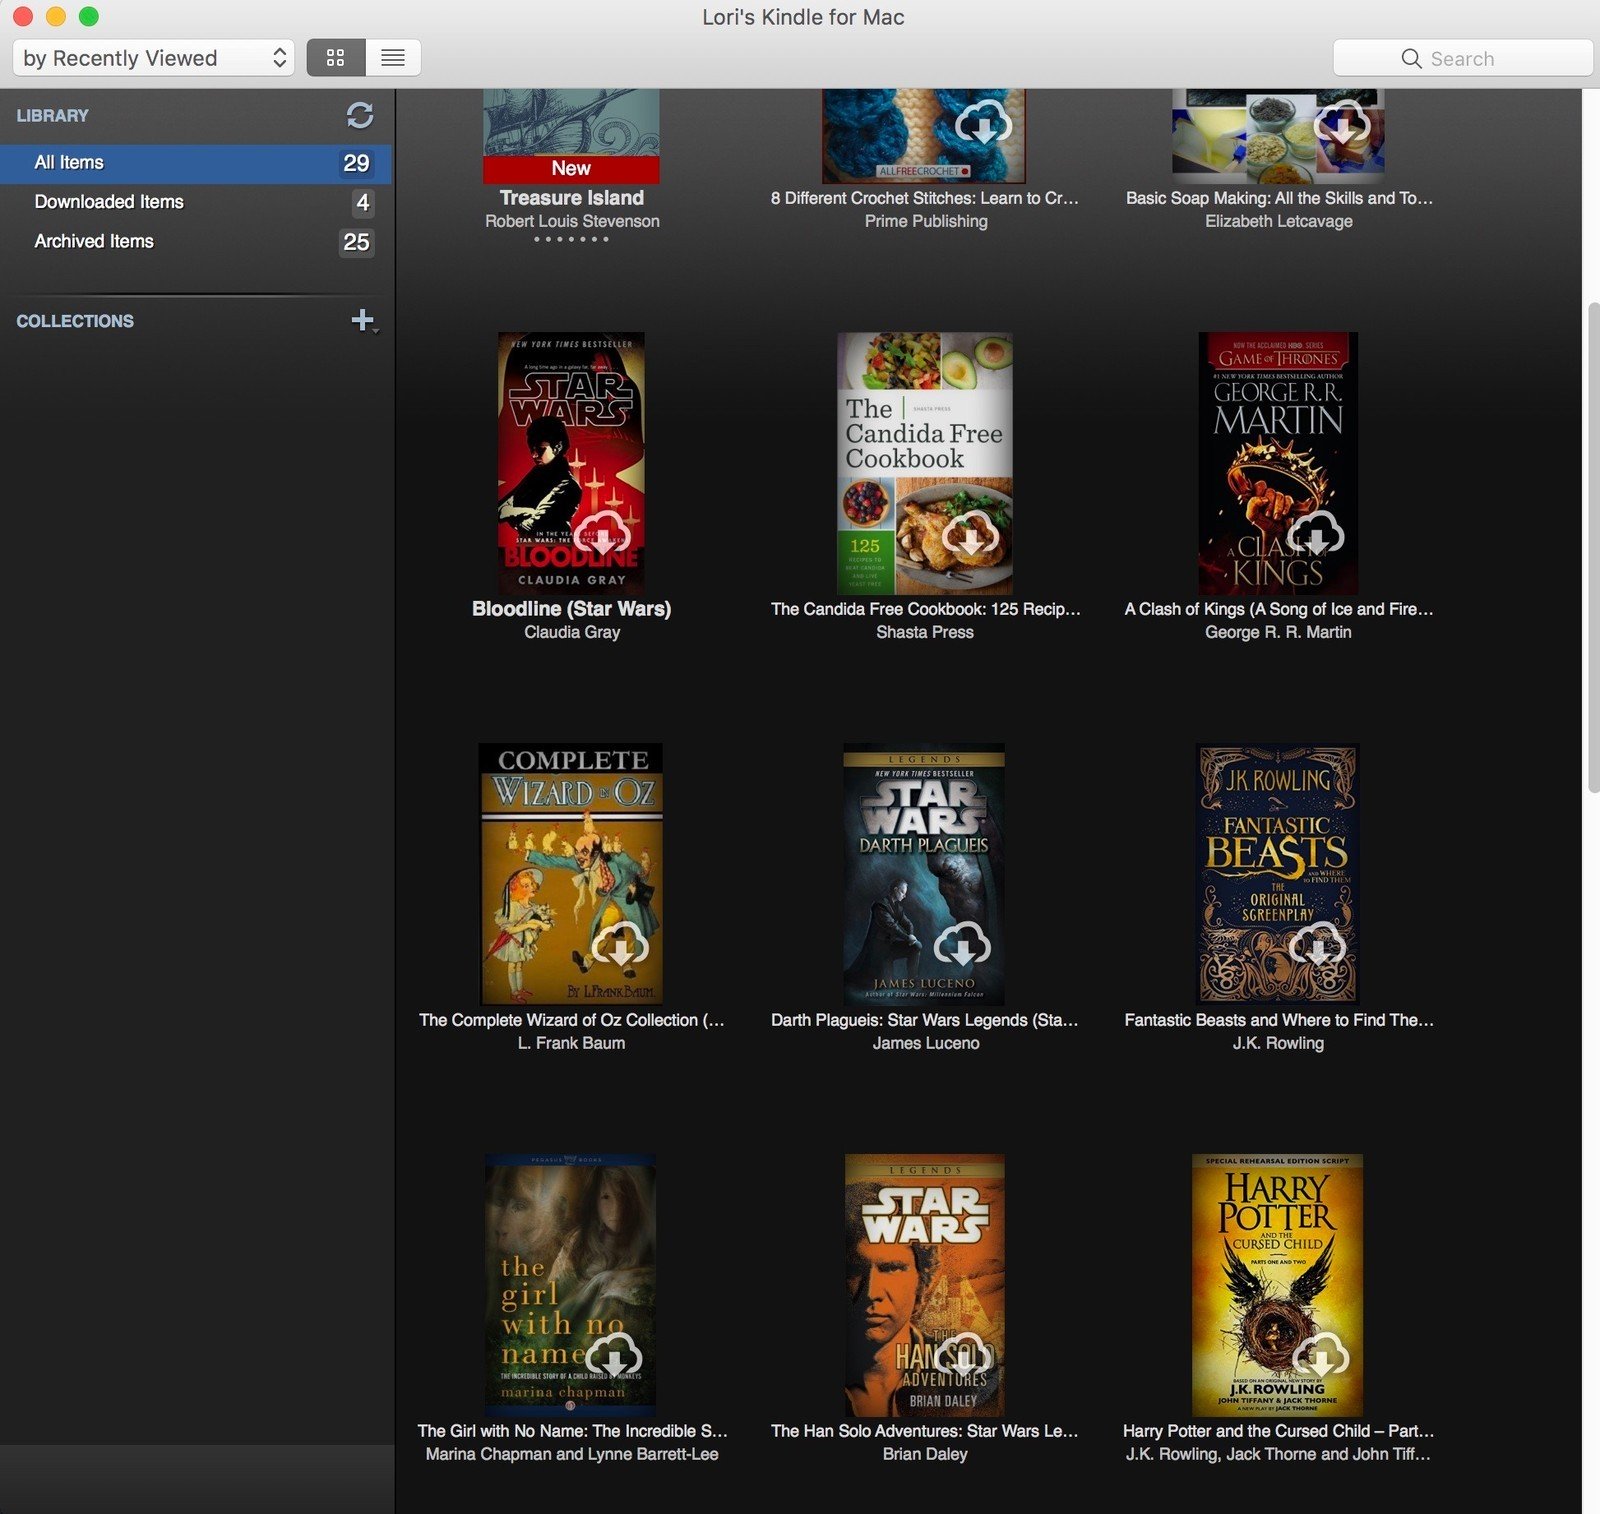 ebook reader mac free download